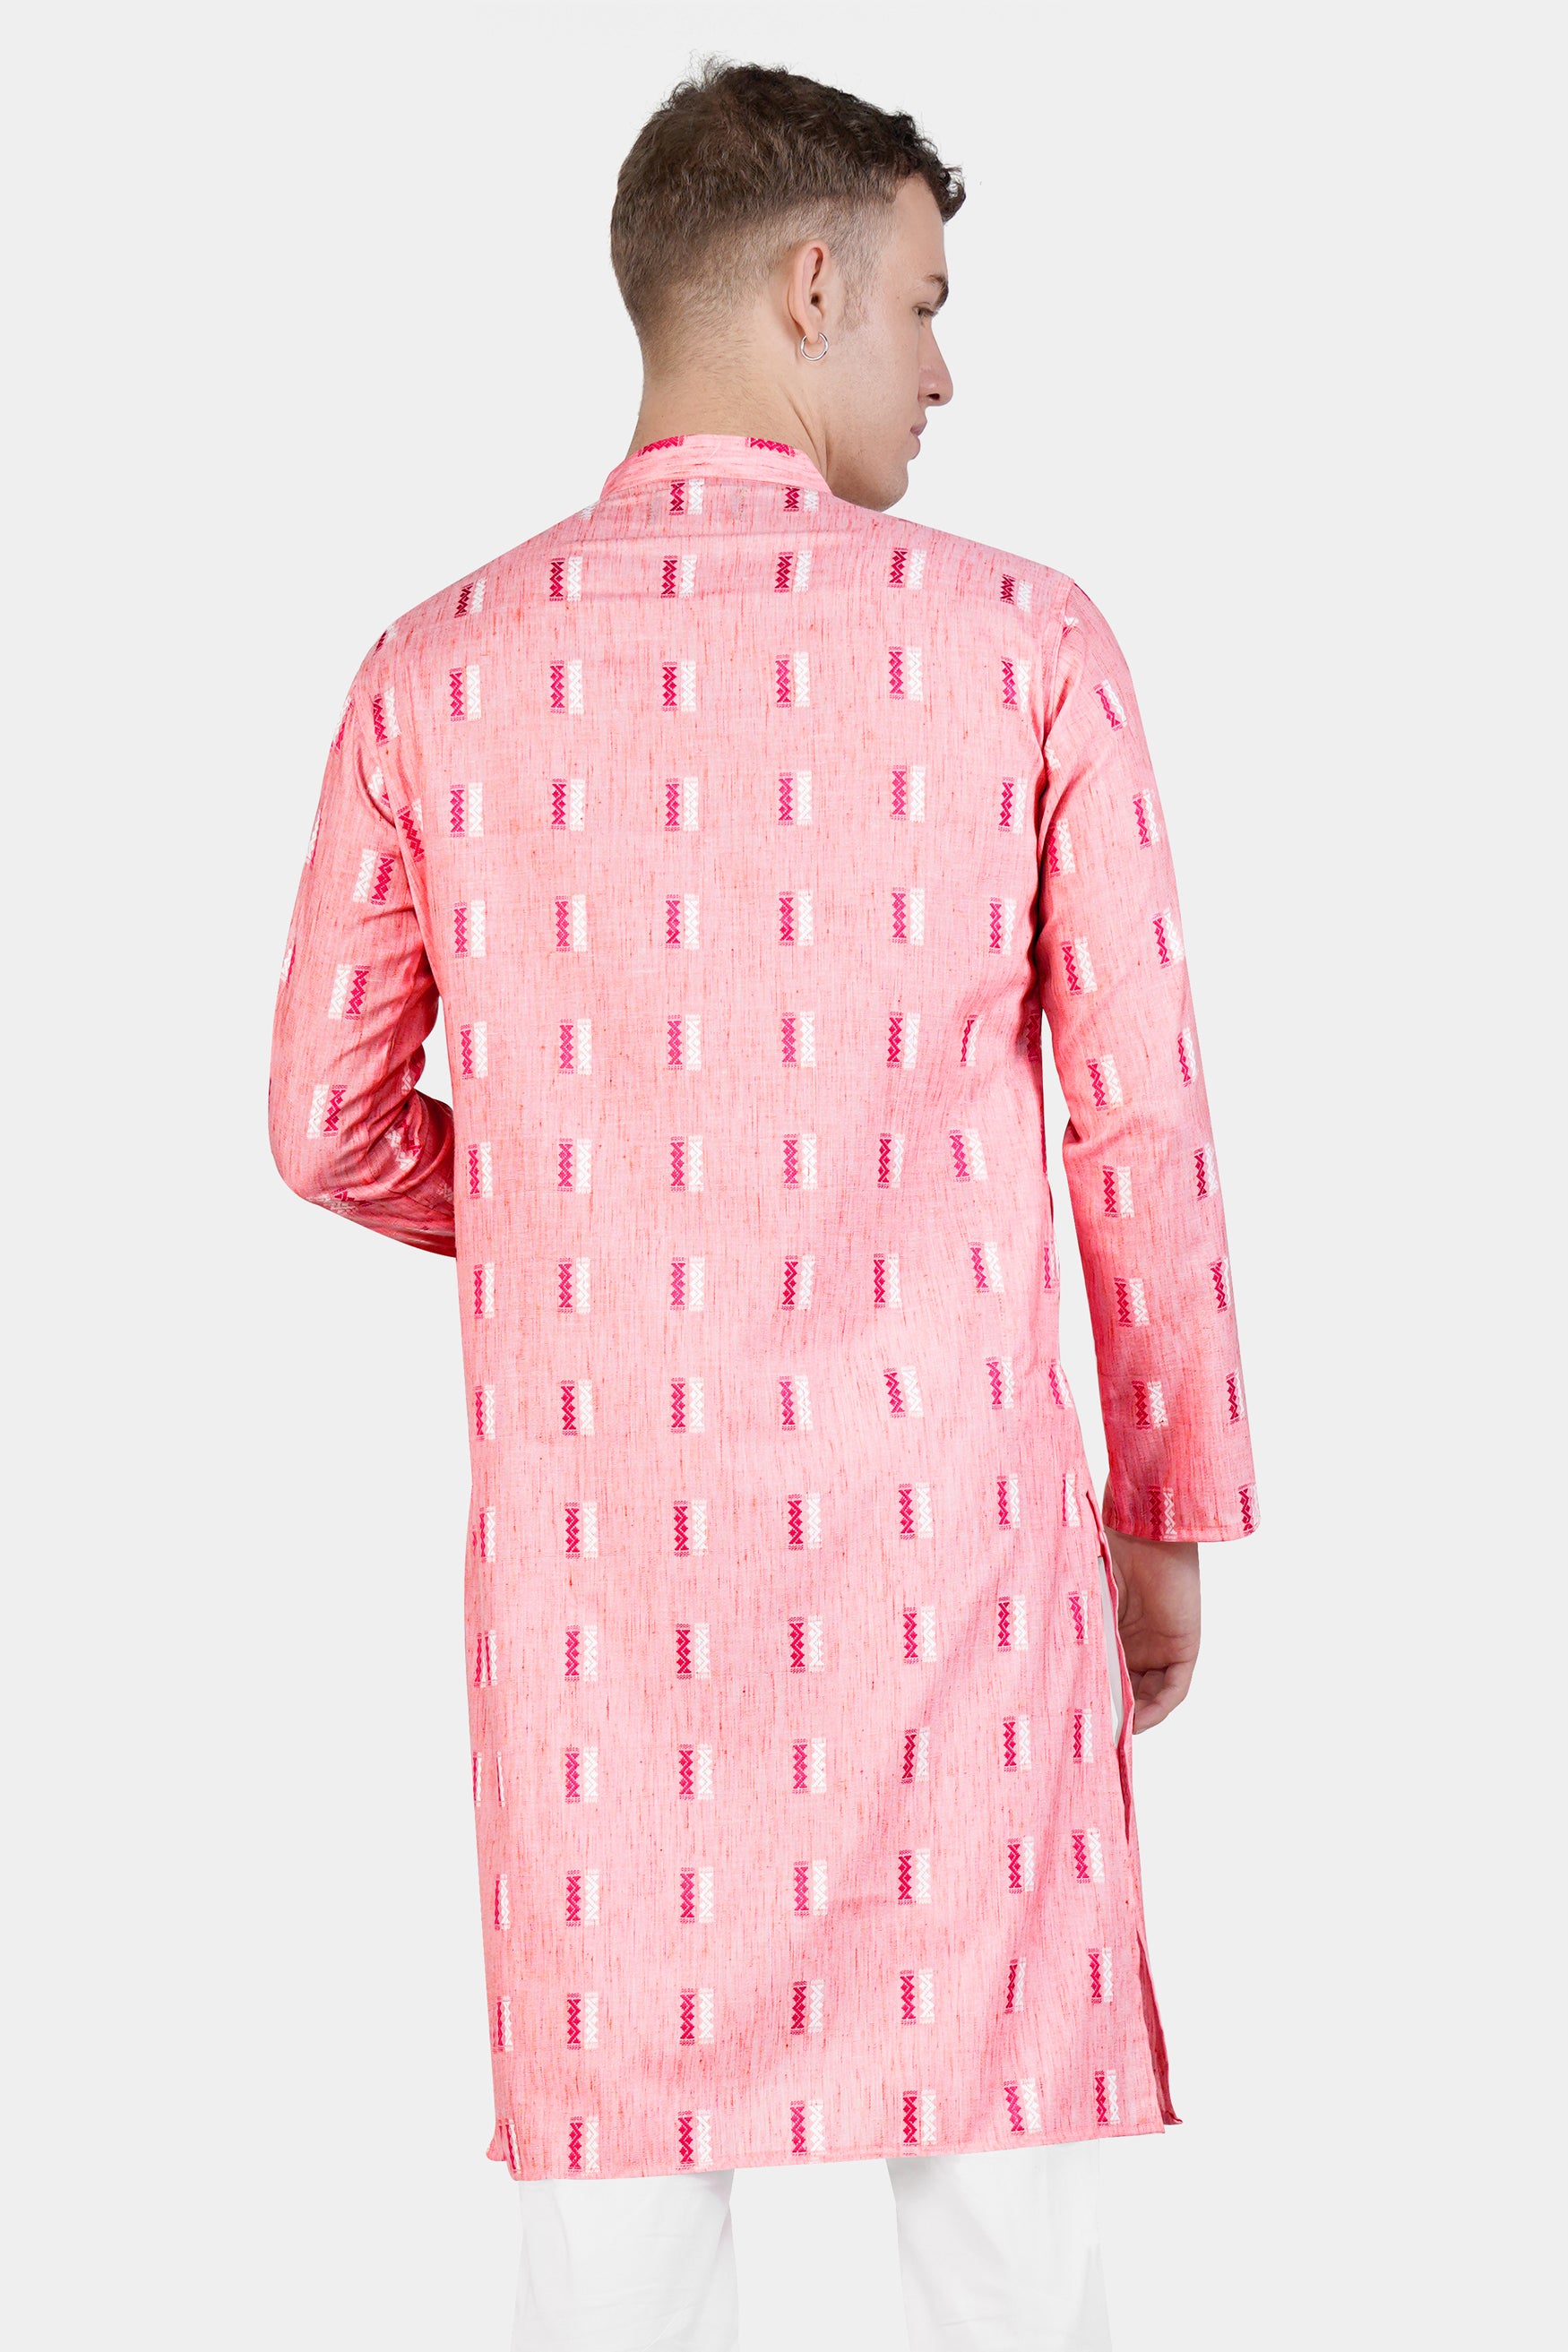 Light Rose Pink Zig-zag Textured Jacquard Premium Giza Cotton Kurta